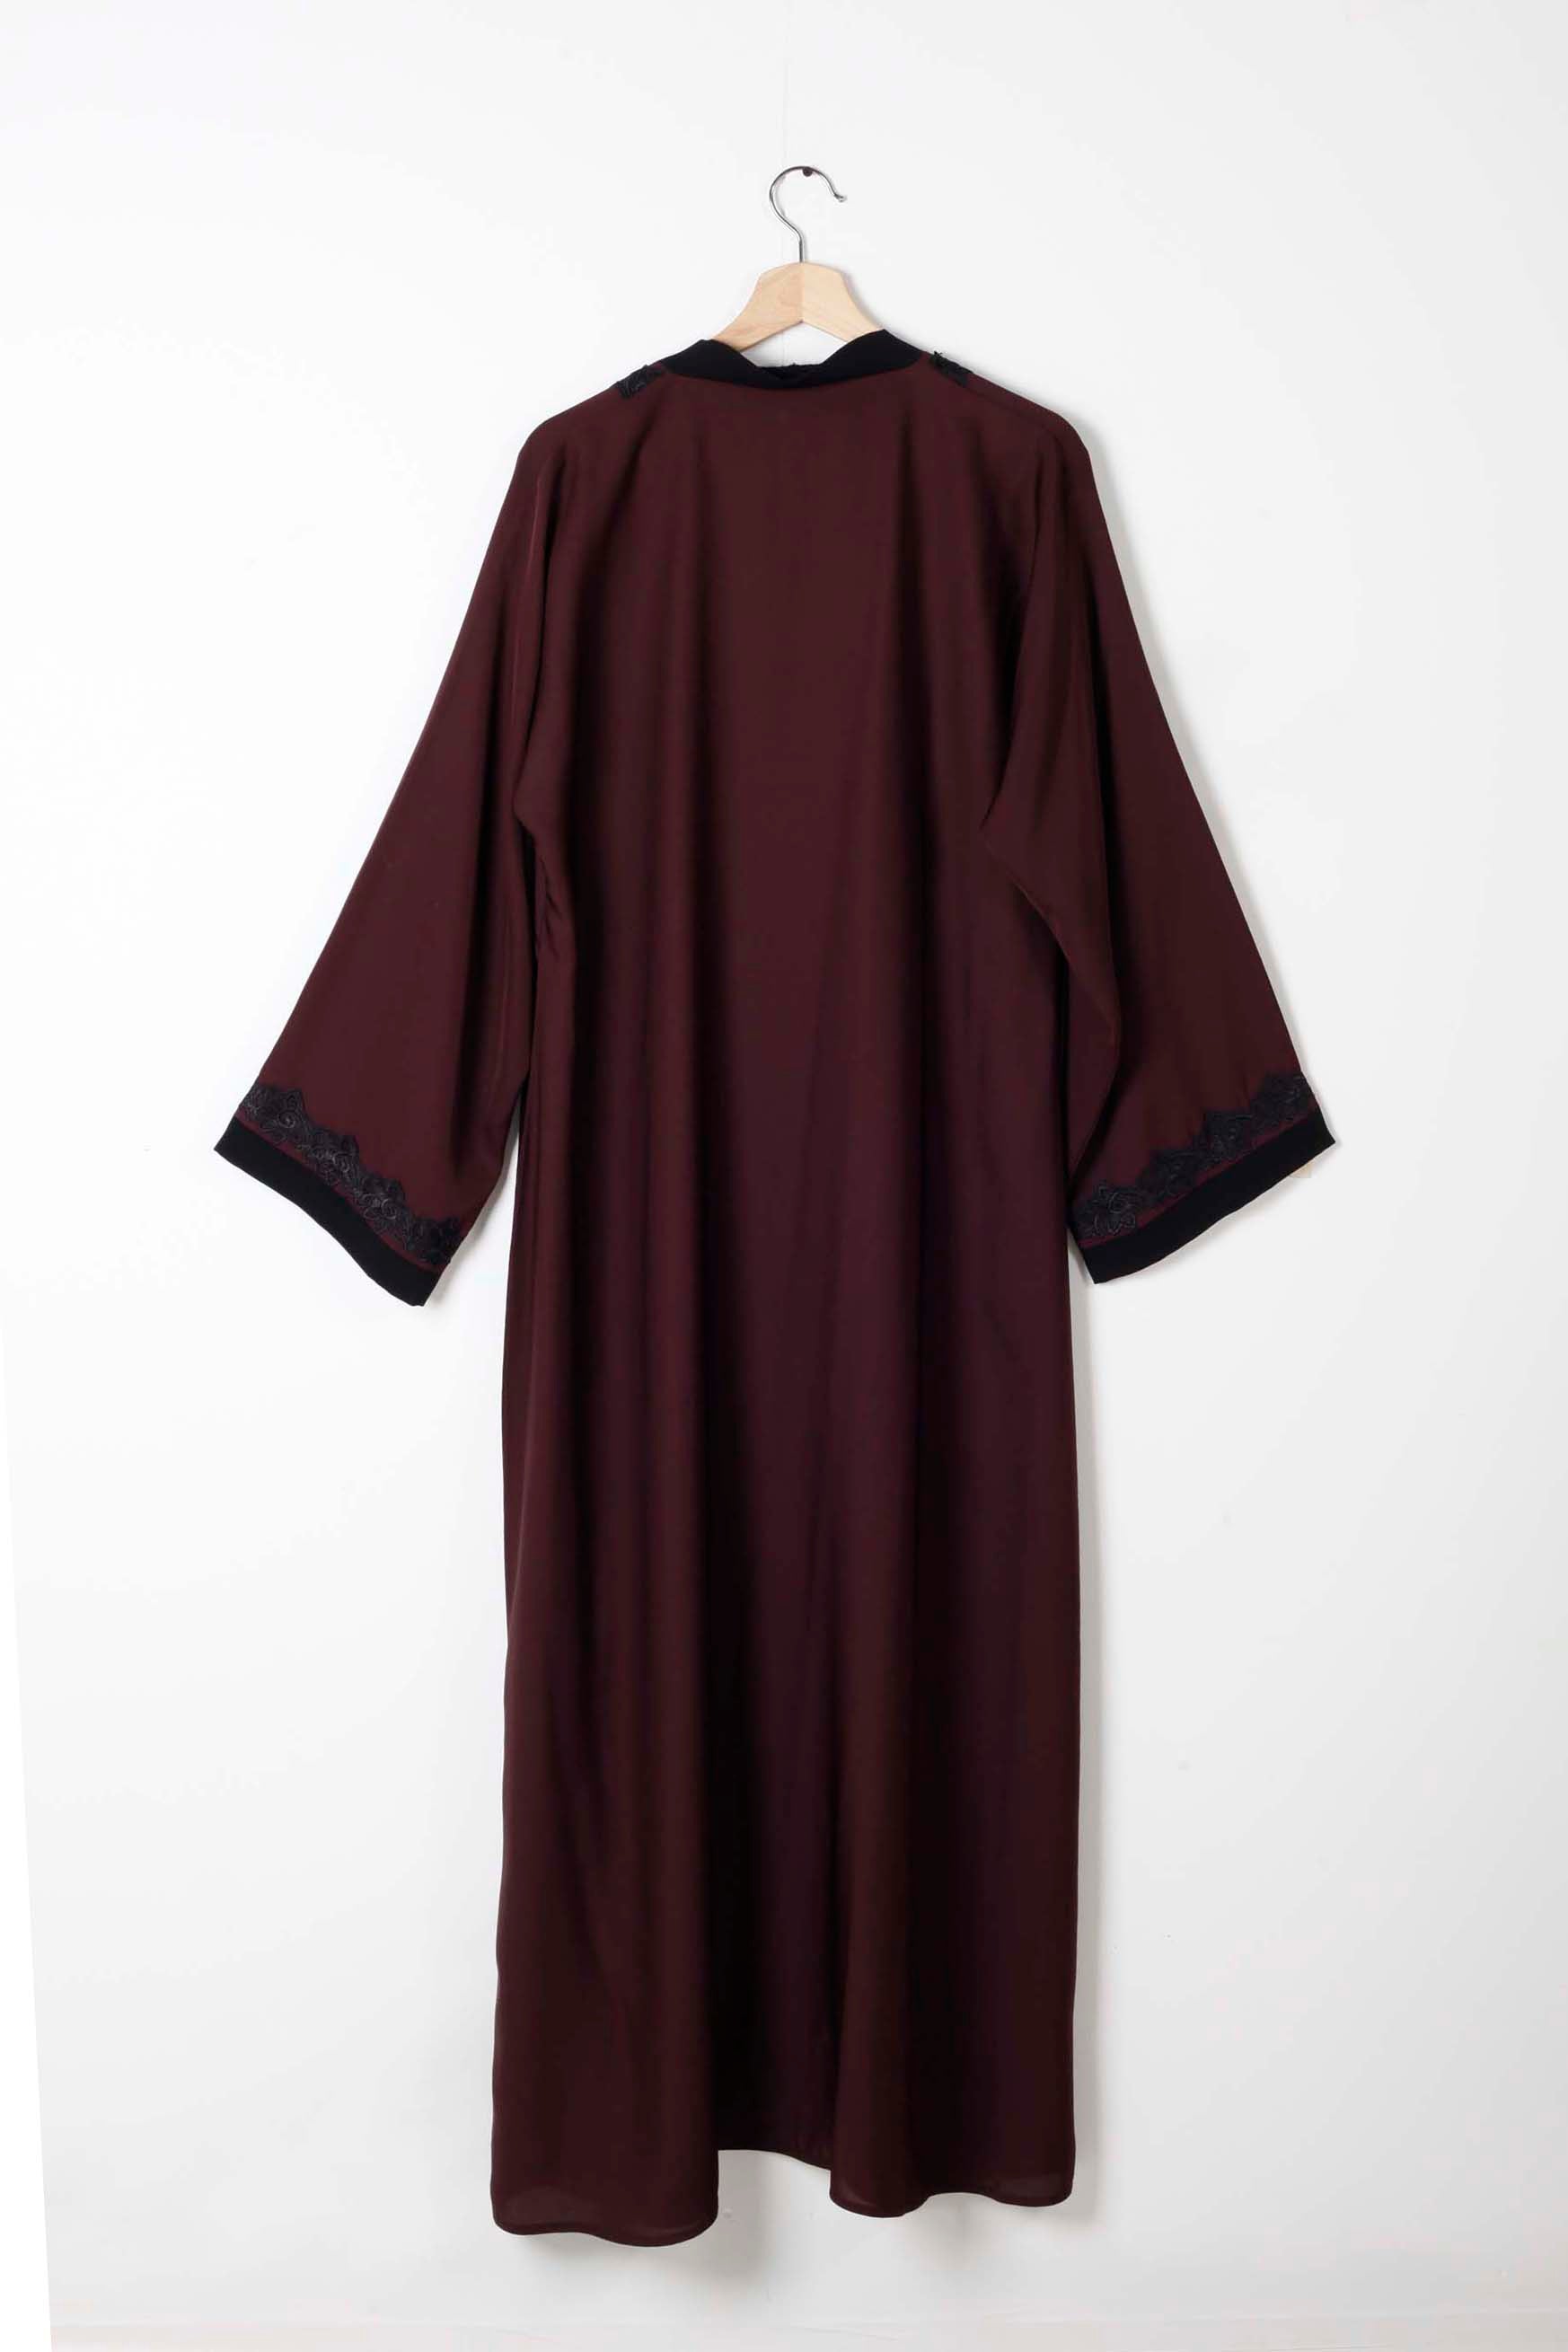 Maroon Abaya with Black Lace Detailing